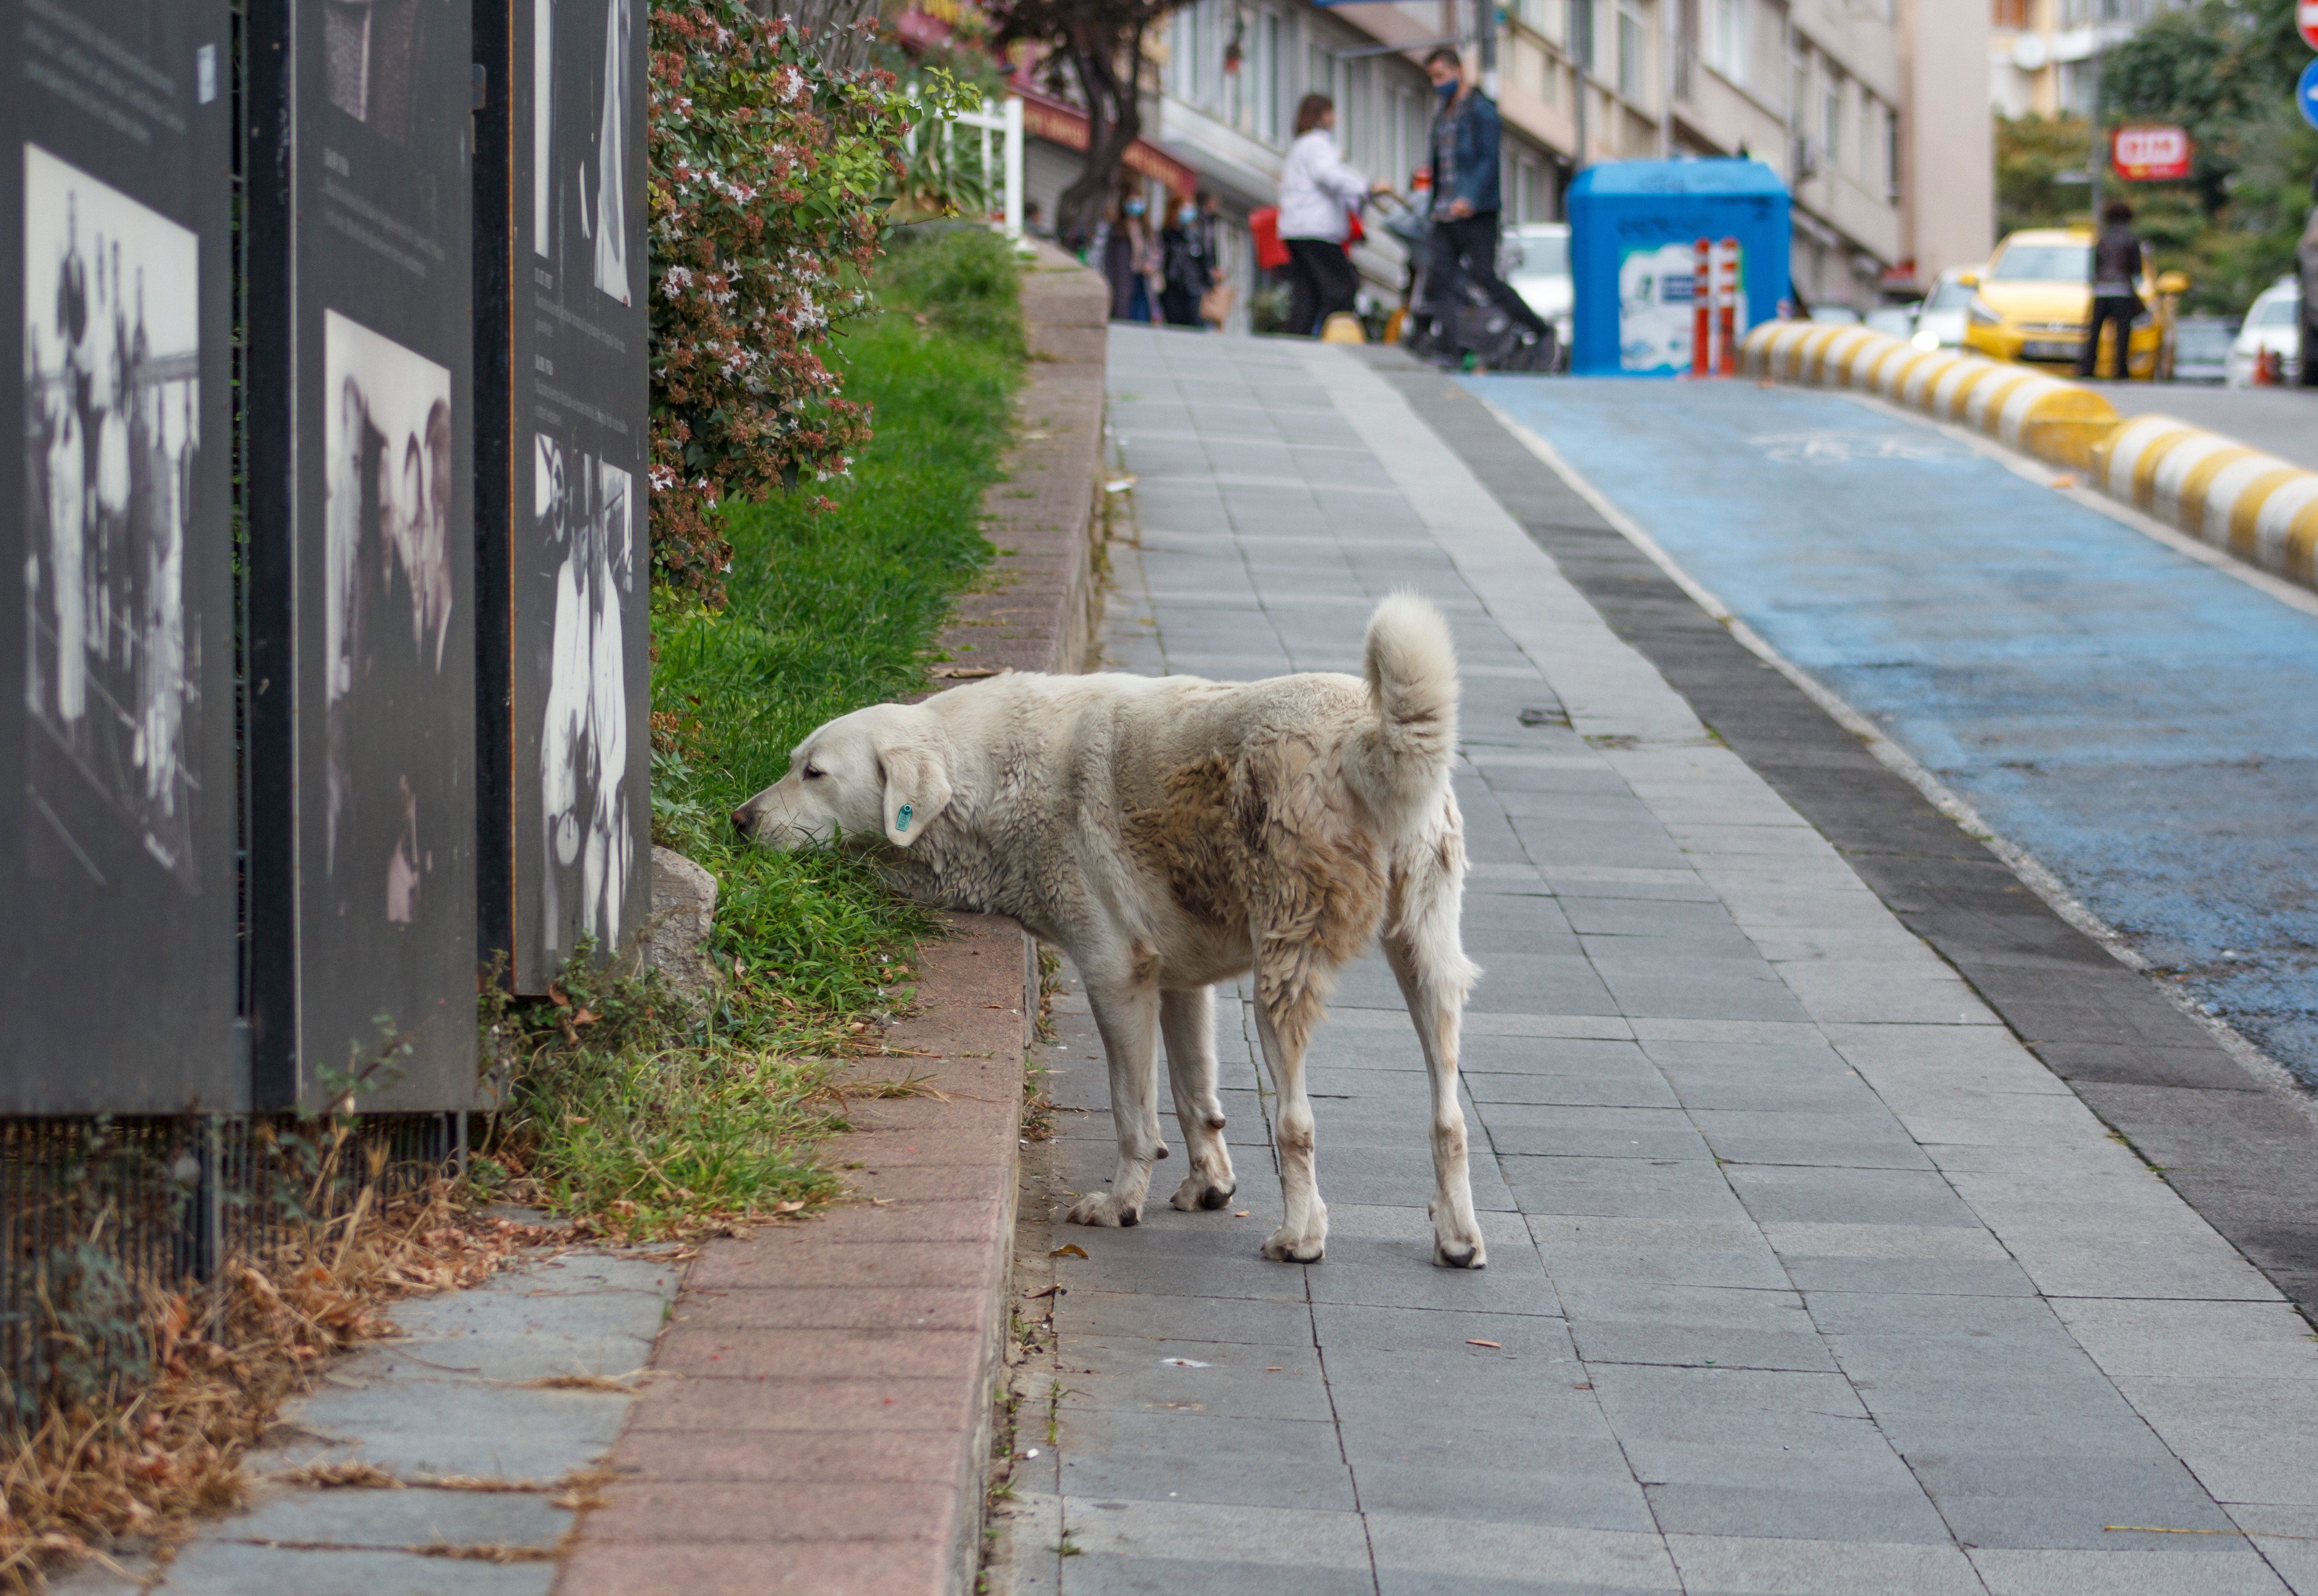 Large, fluffy stray dog standing on sidewalk | Source: Shutterstock